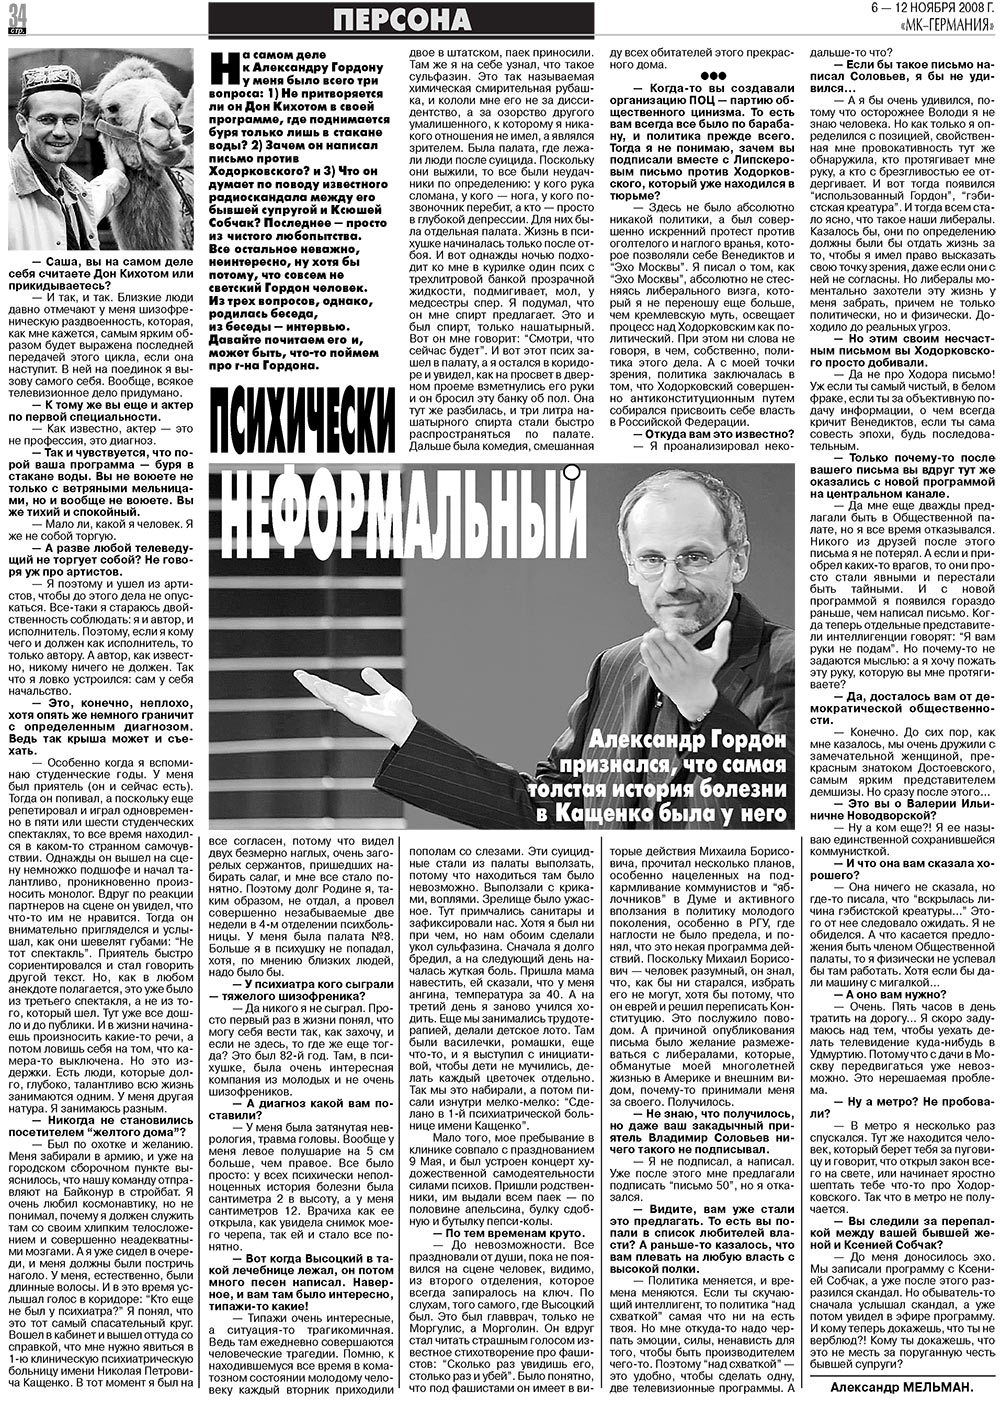 МК-Германия, газета. 2008 №45 стр.34